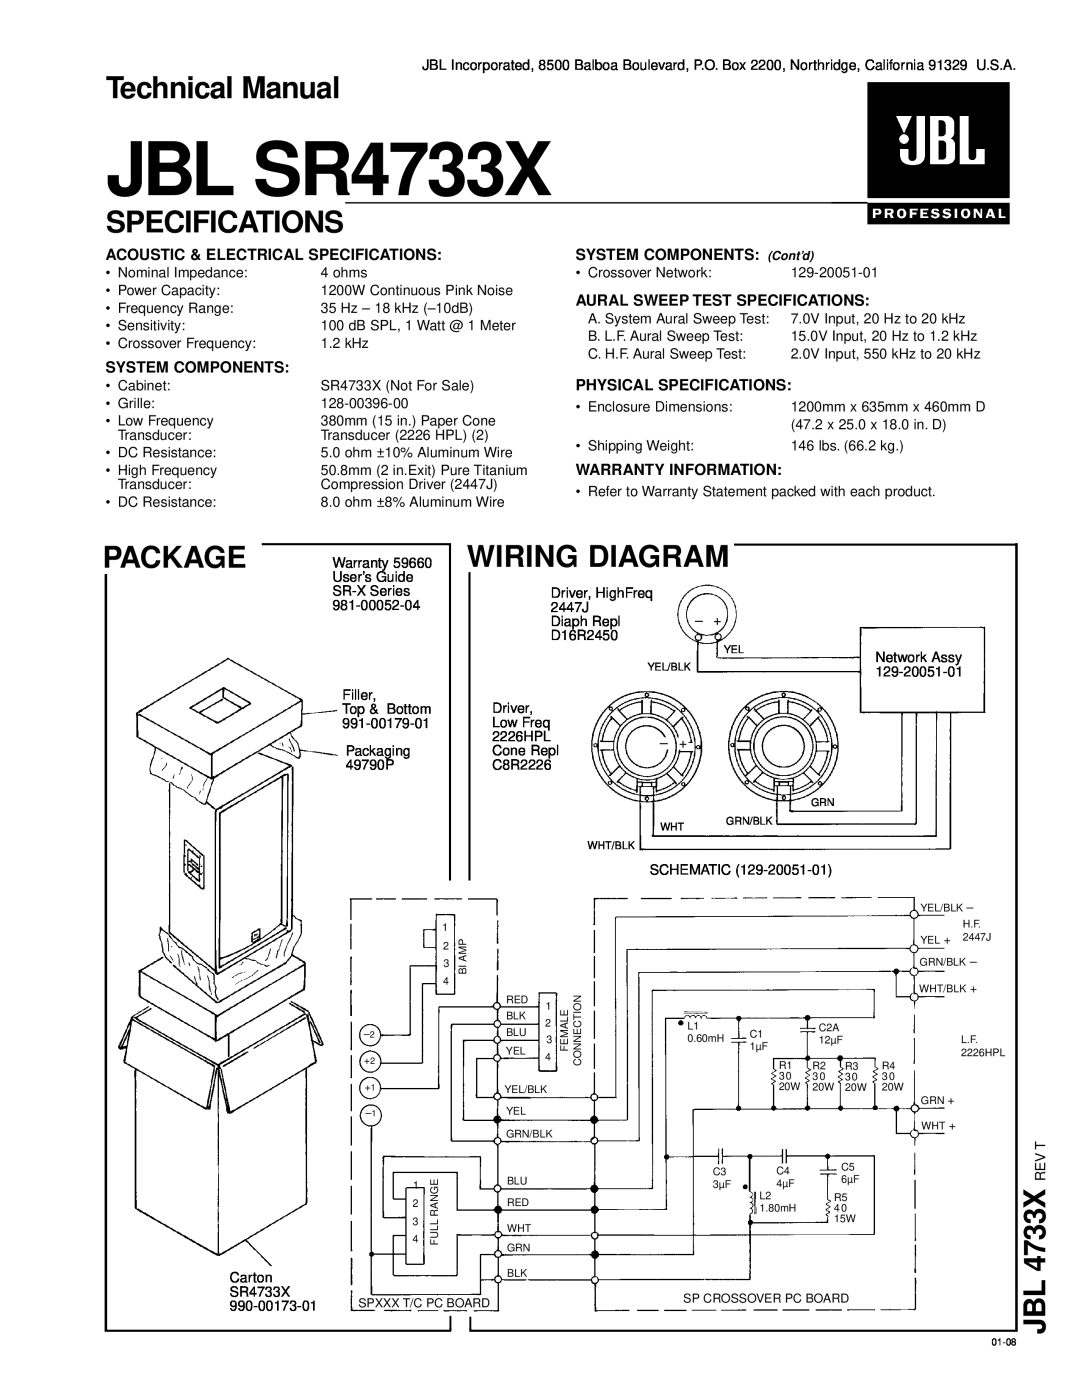 JBL technical manual JBL SR4733X, Technical Manual, Specifications, Package, Wiring Diagram, JBL 4733X REV T 